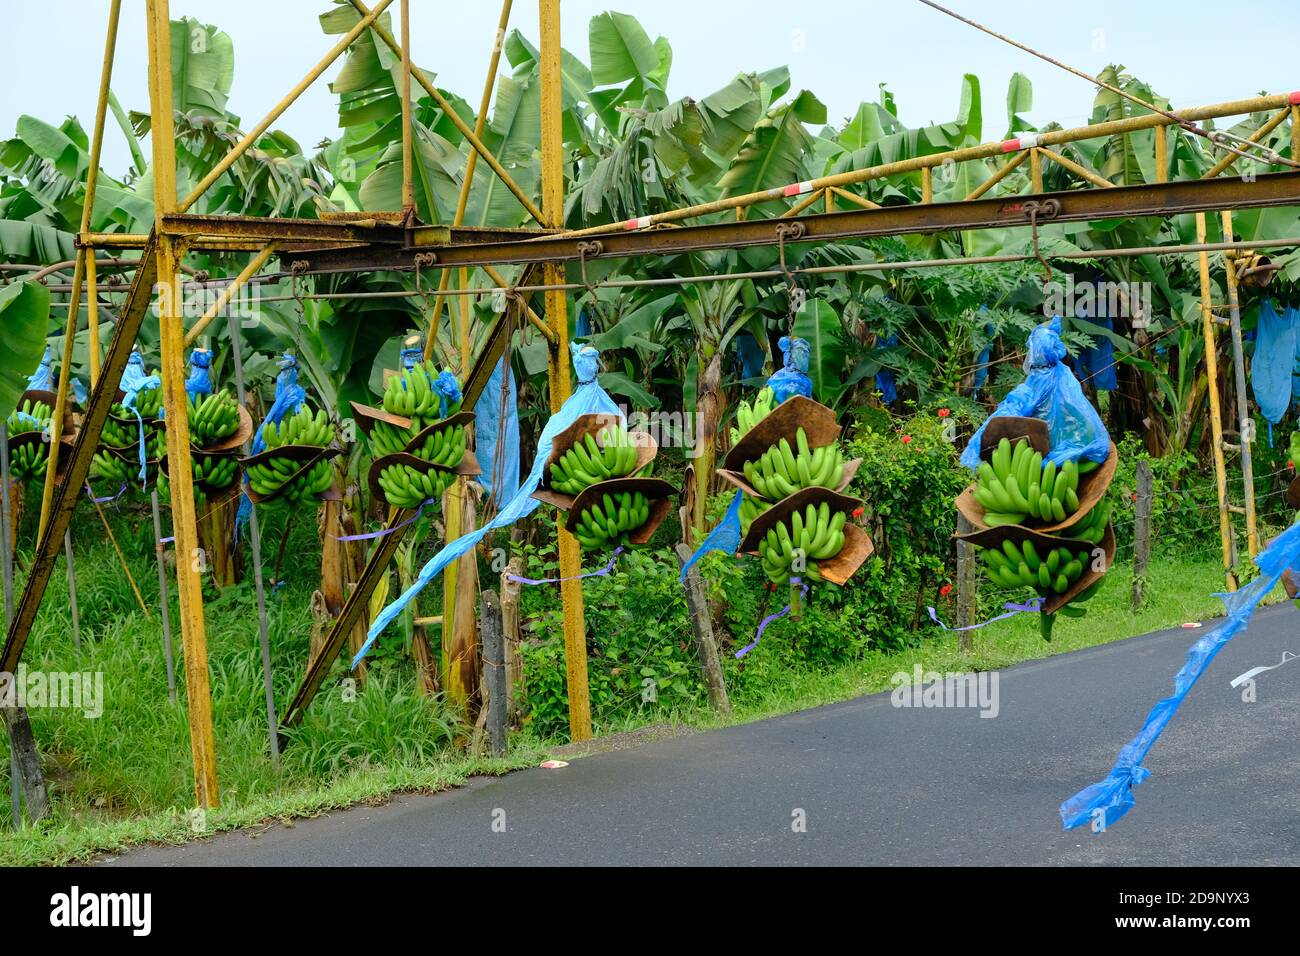 Costa Rica Arenal Volcano and La Fortuna - Banana plantation harvest transport system Stock Photo